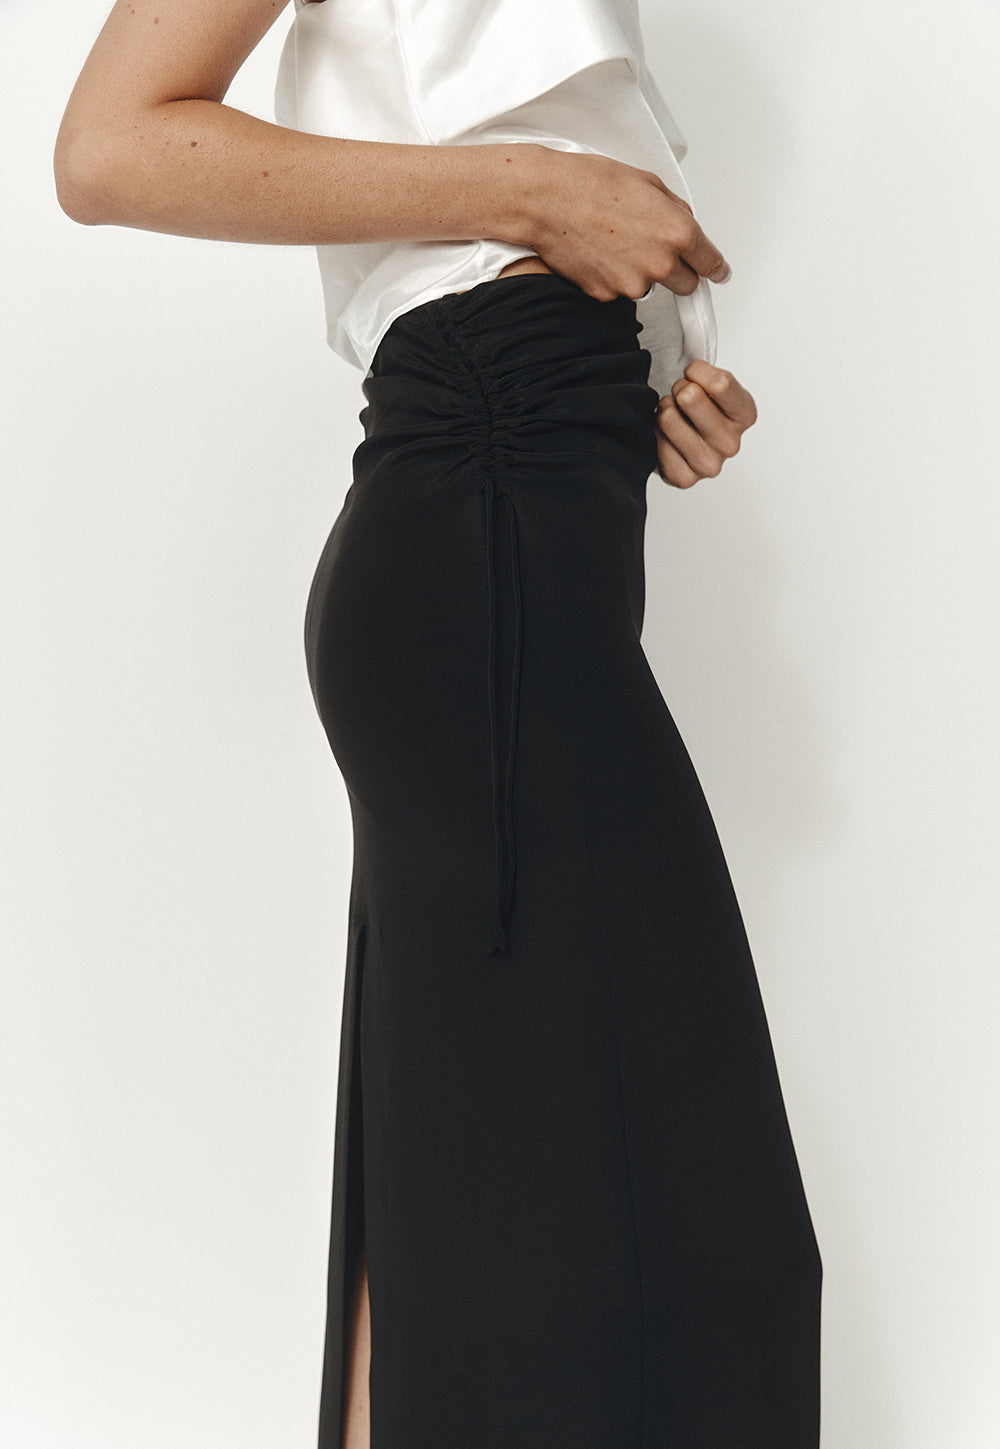 Iris Skirt - Black sold by Angel Divine